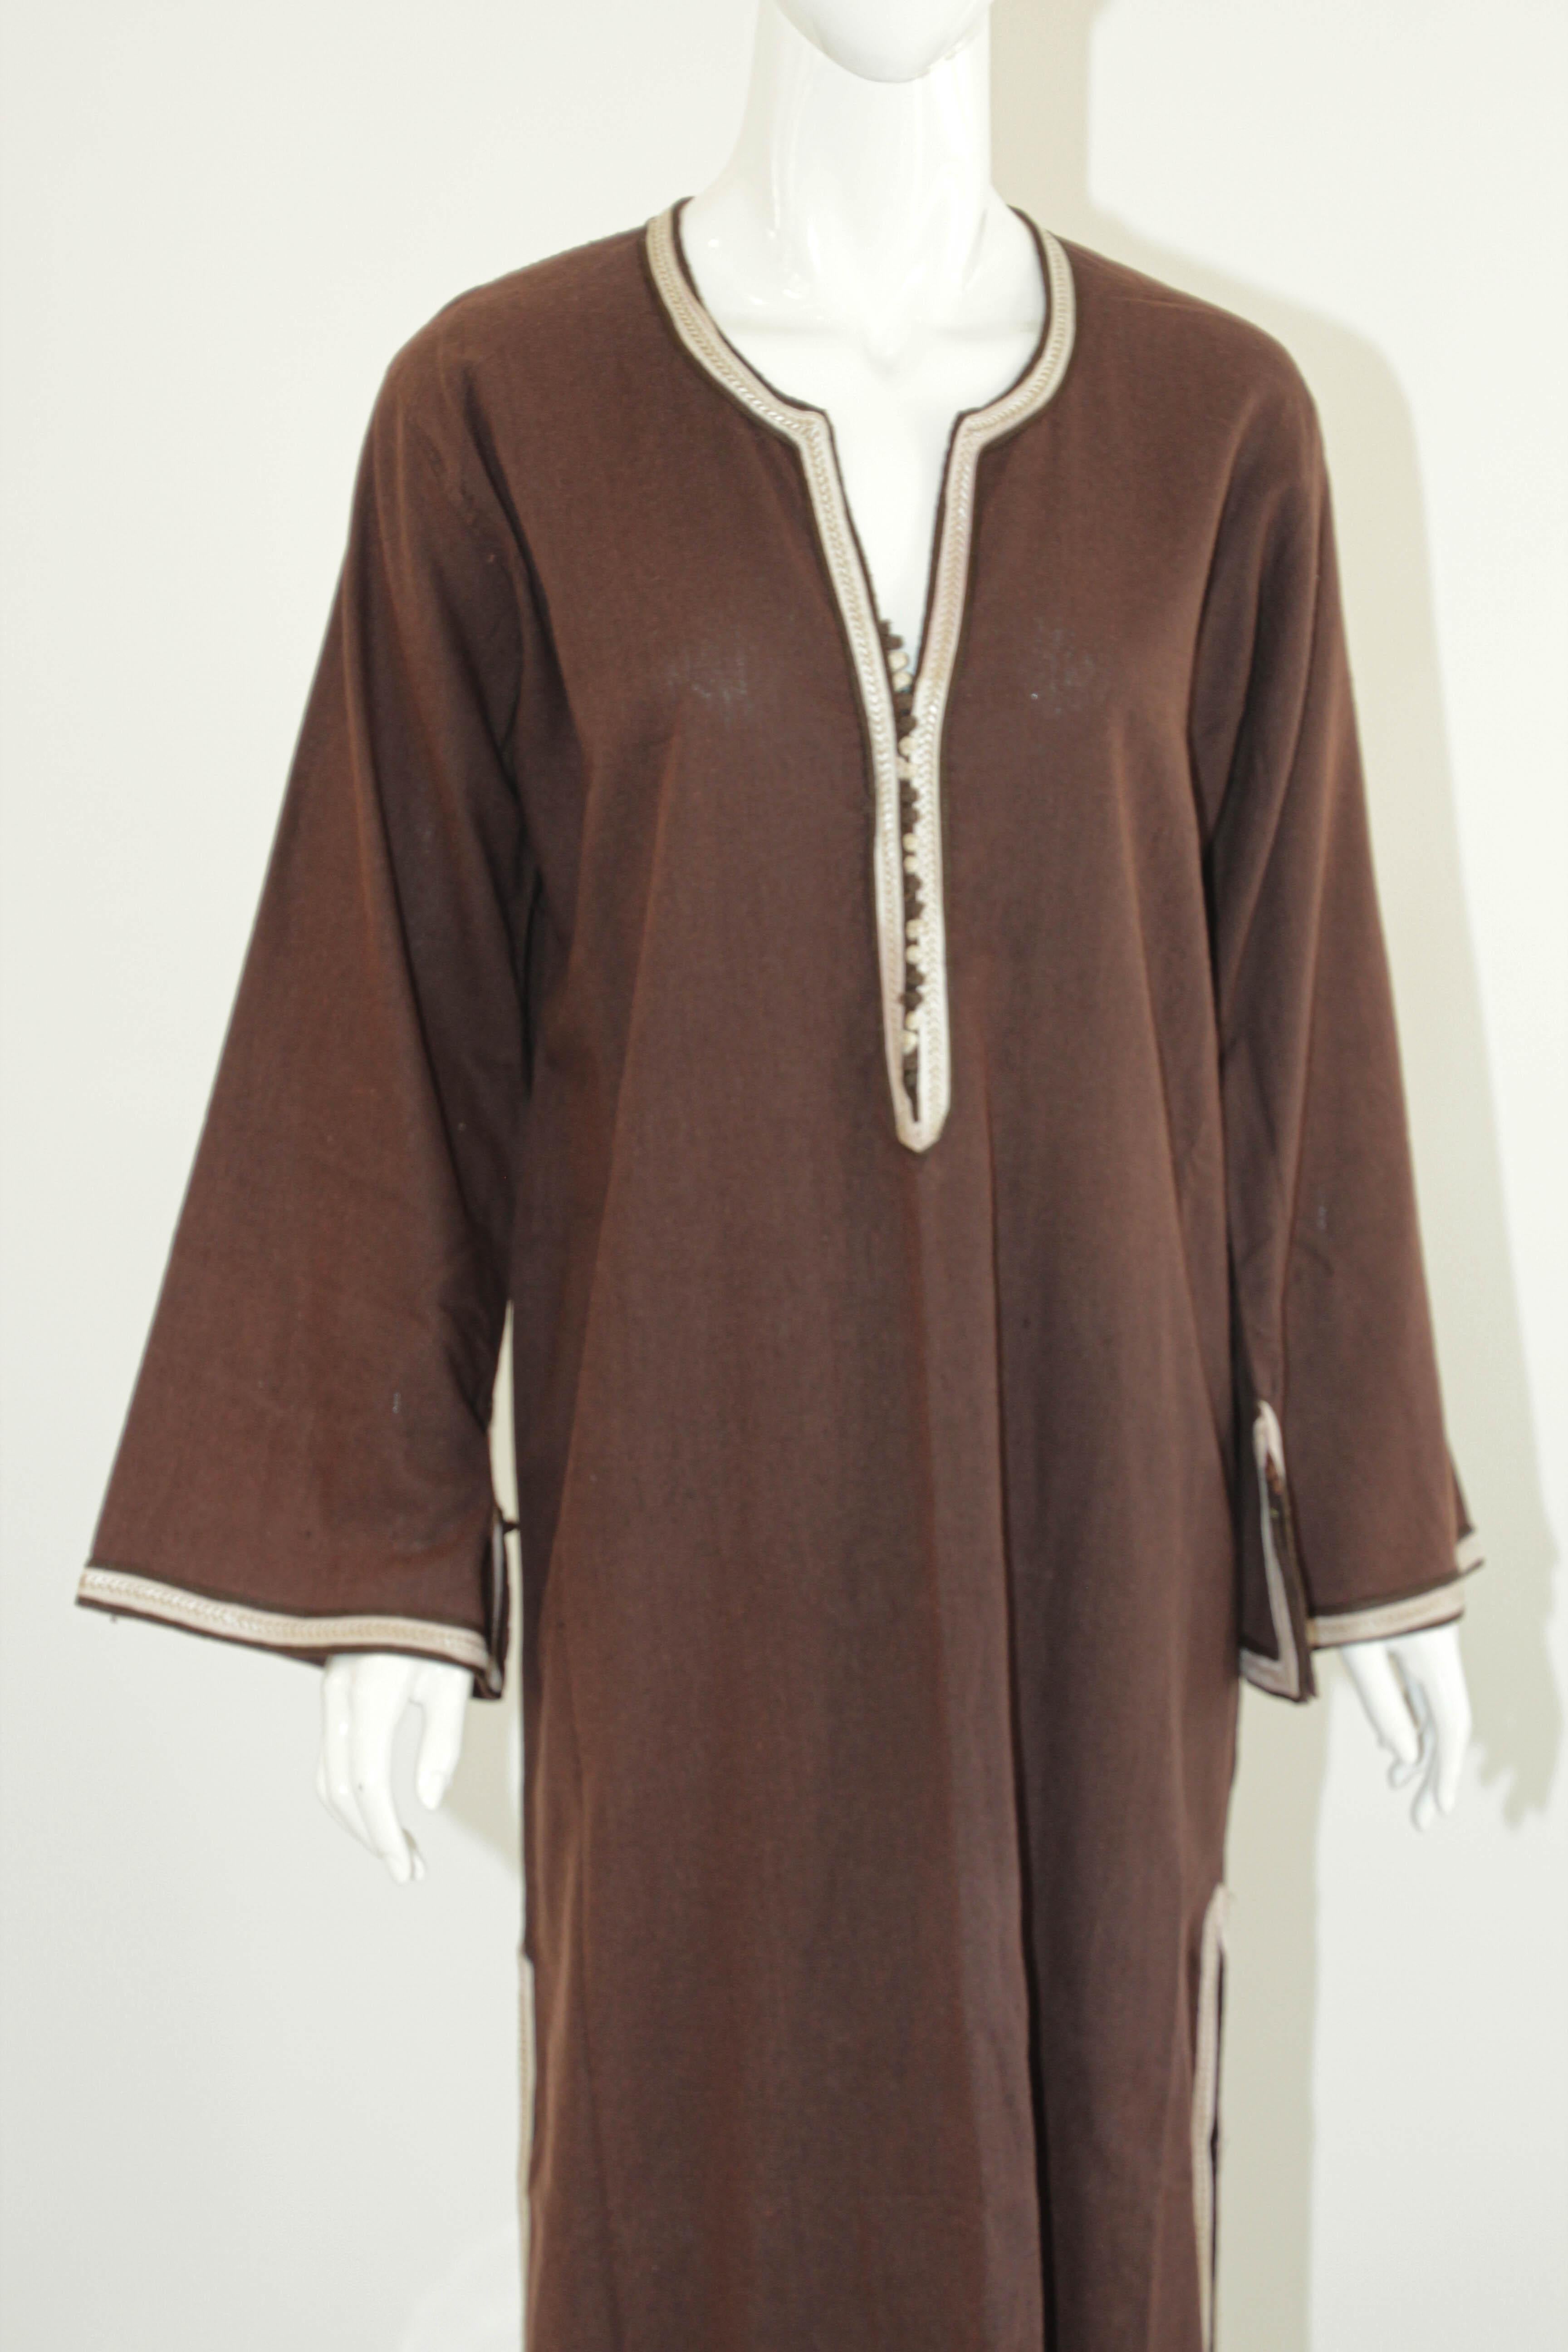 Vintage Moorish Moroccan brown cotton caftan, circa 1980s.
Vintage Bohemian style kaftan.
Long sleeves.
Size medium.
Measurements: 
Bust: 38